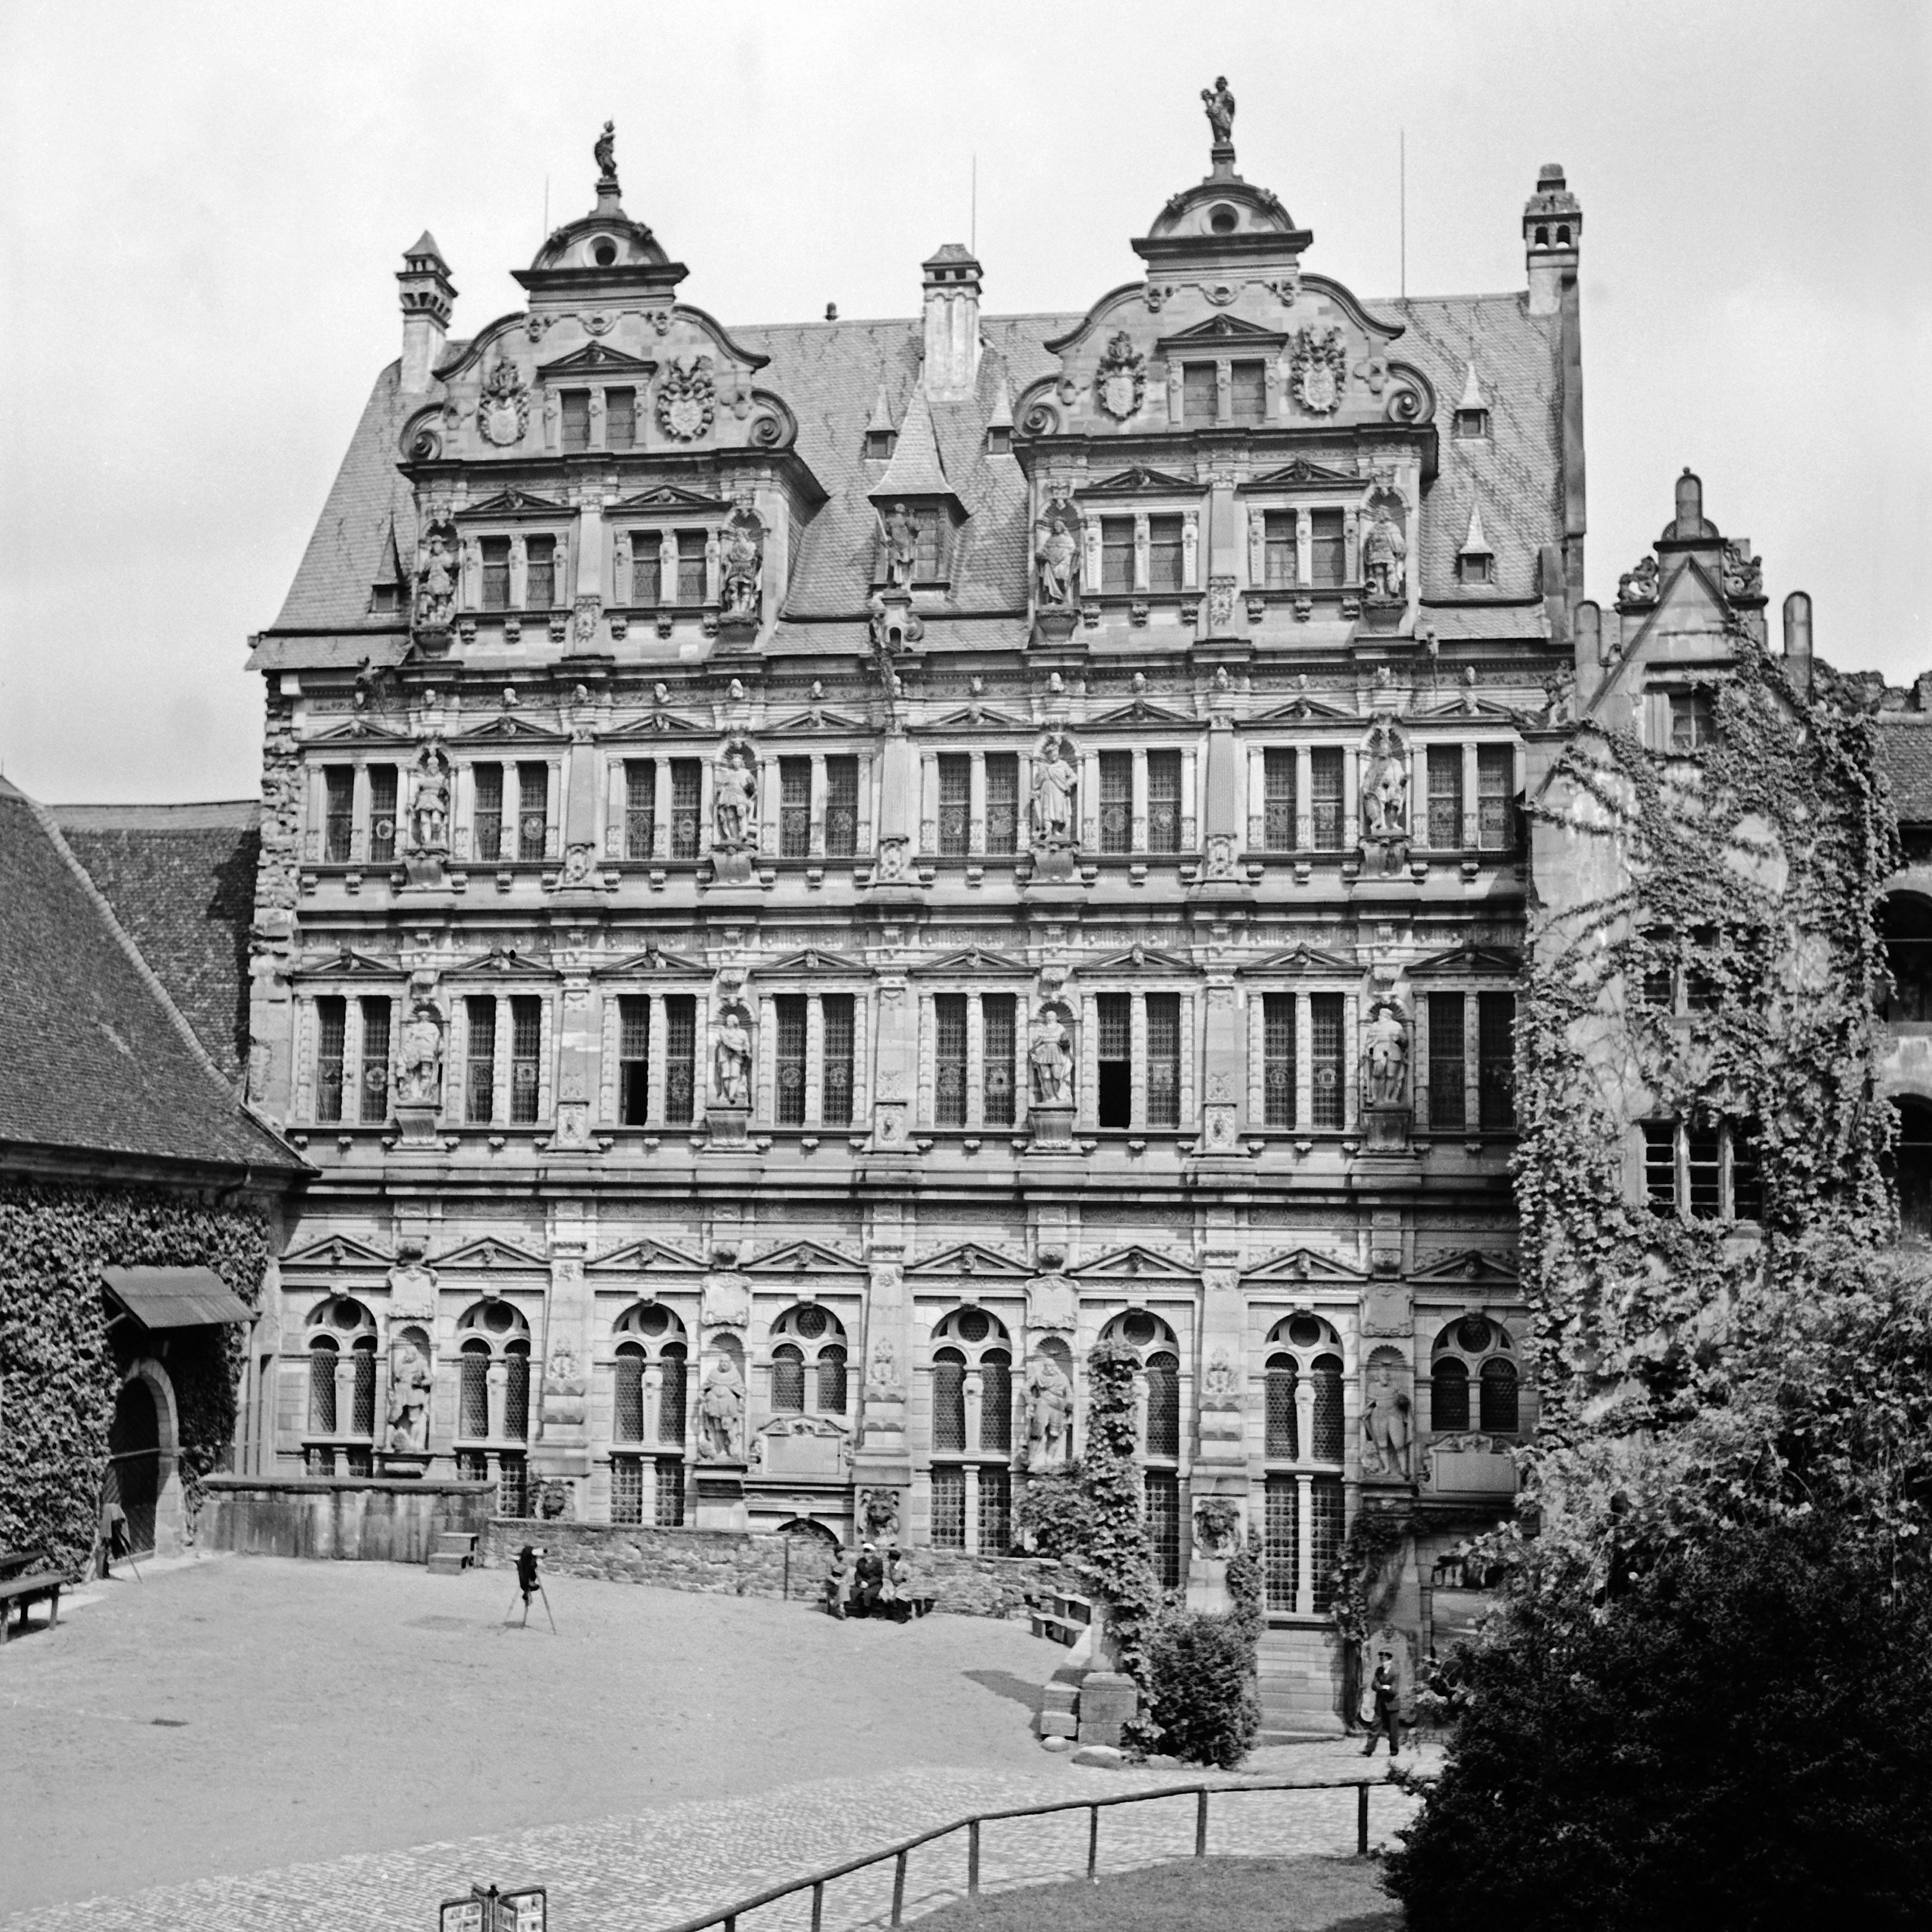 Karl Heinrich Lämmel Black and White Photograph - Friedrichsbau building at Castle, Heidelberg Germany 1938, Printed Later